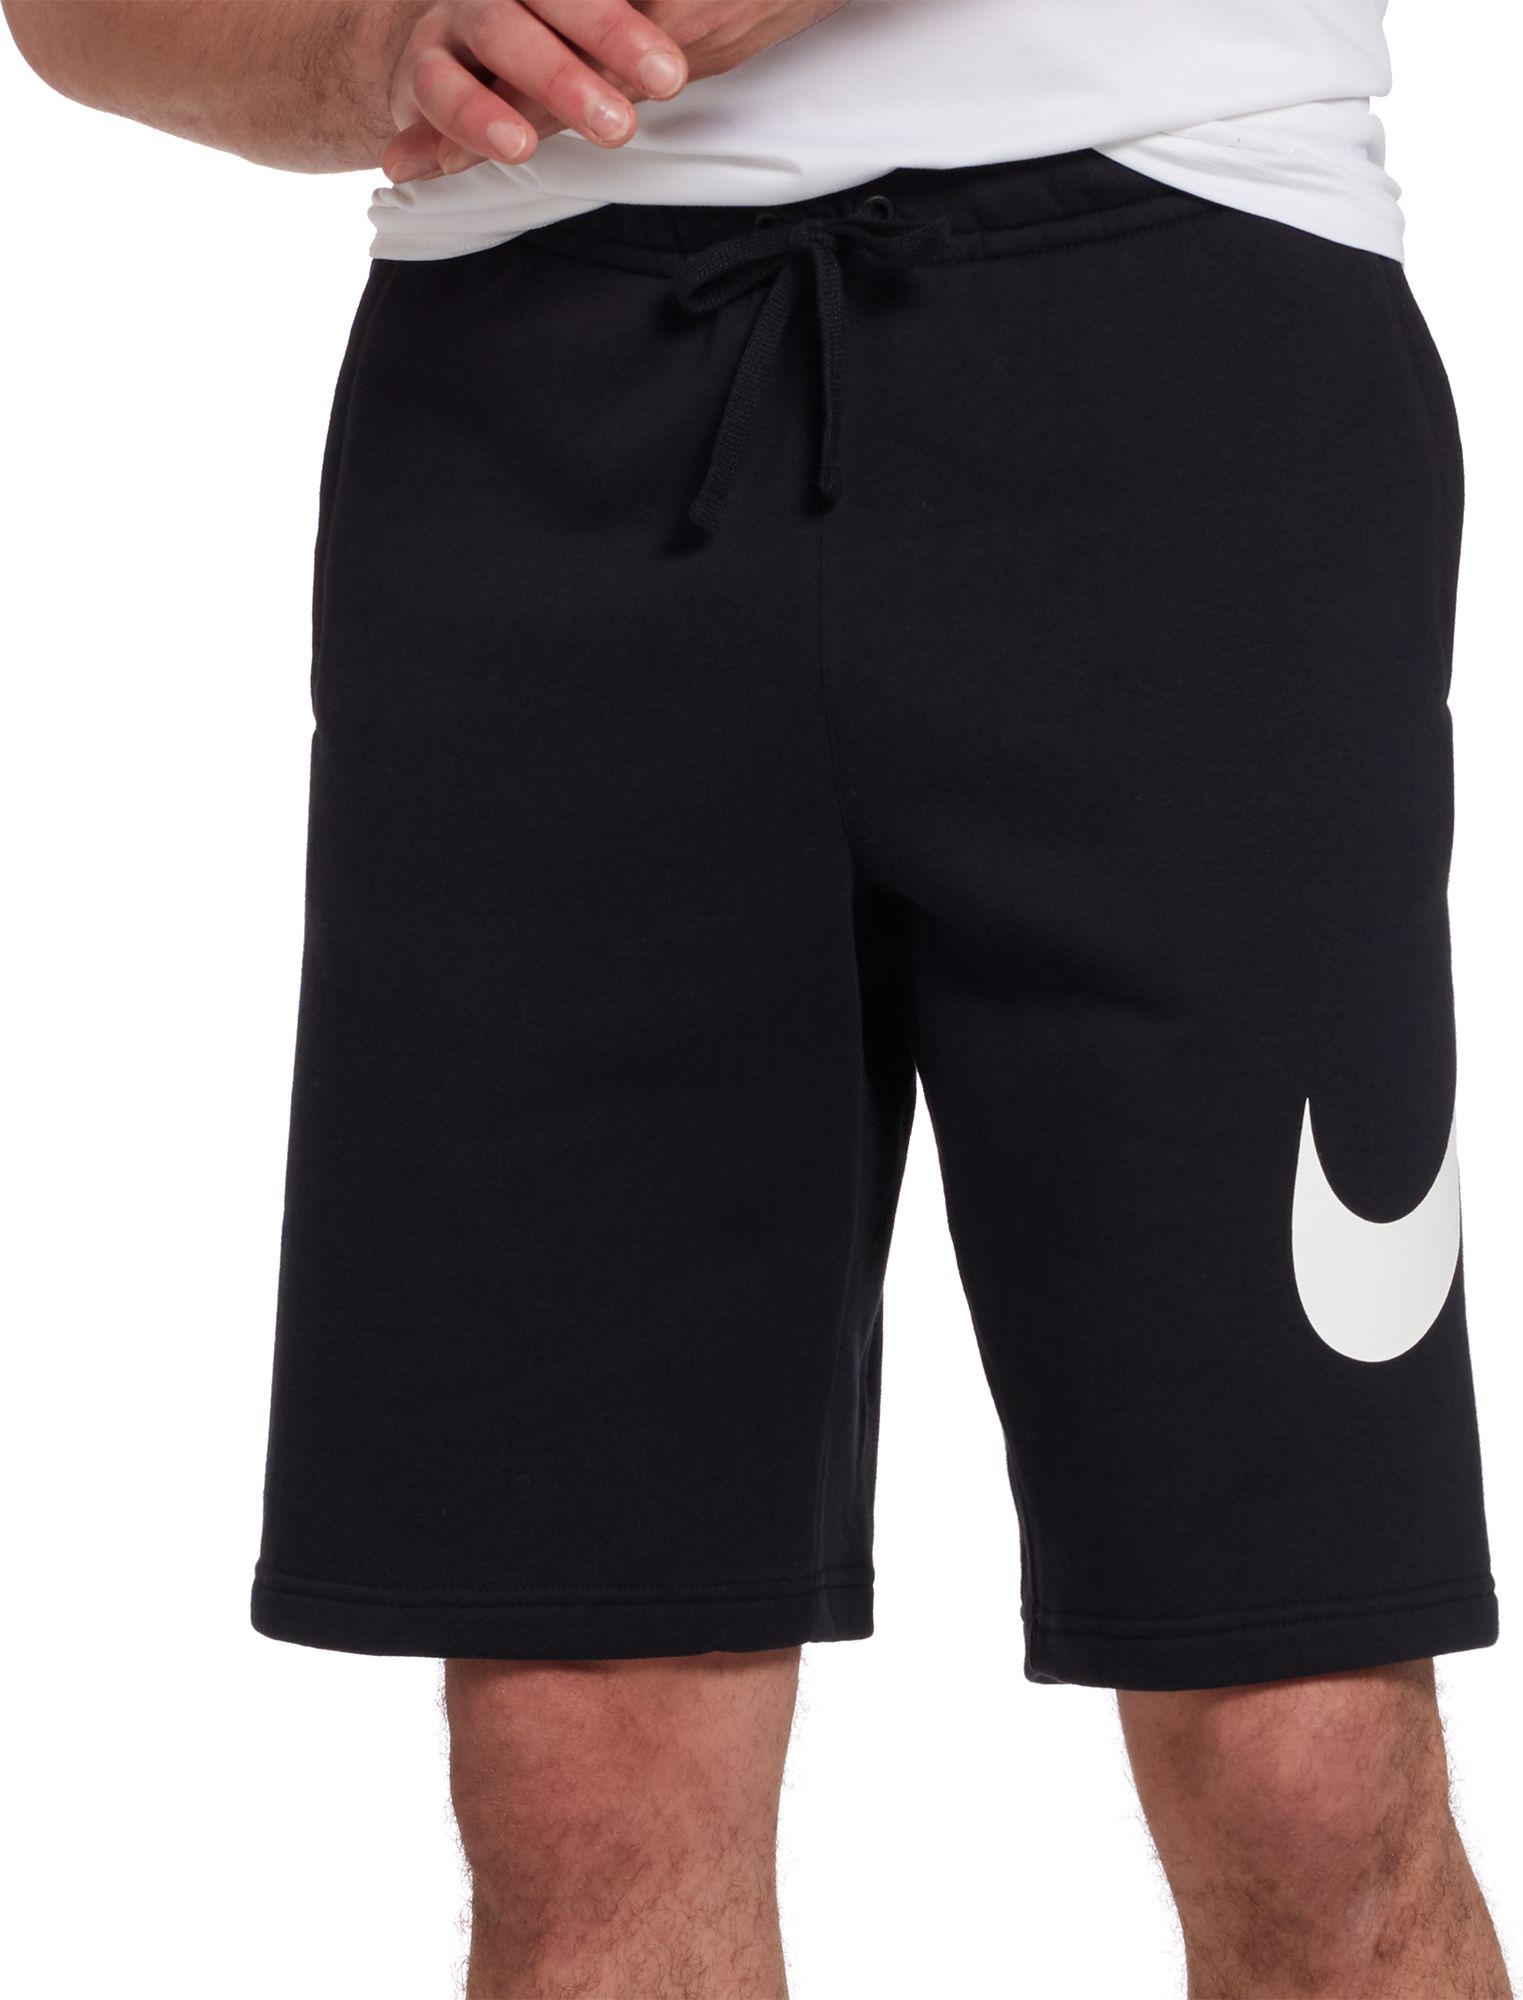 nike sweat shorts mens cheap